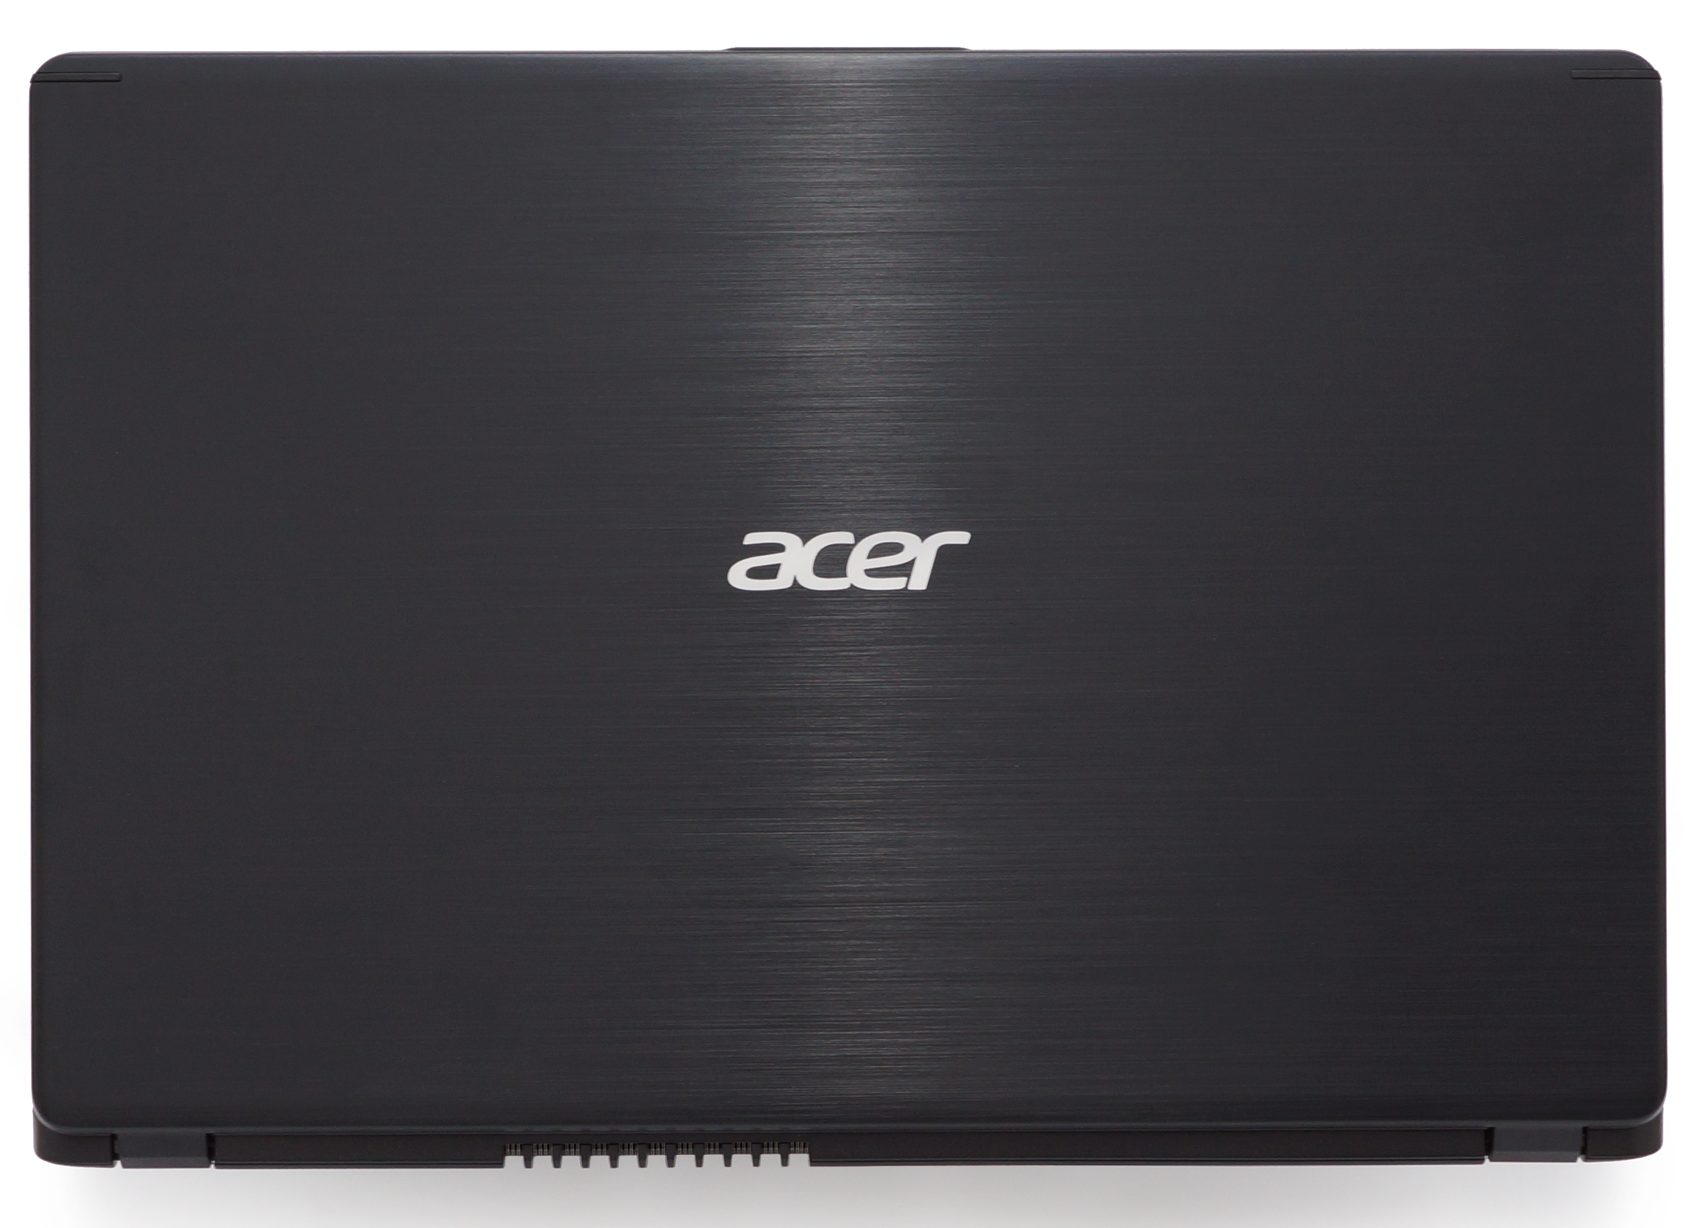 Acer aspire a515 57 52zz